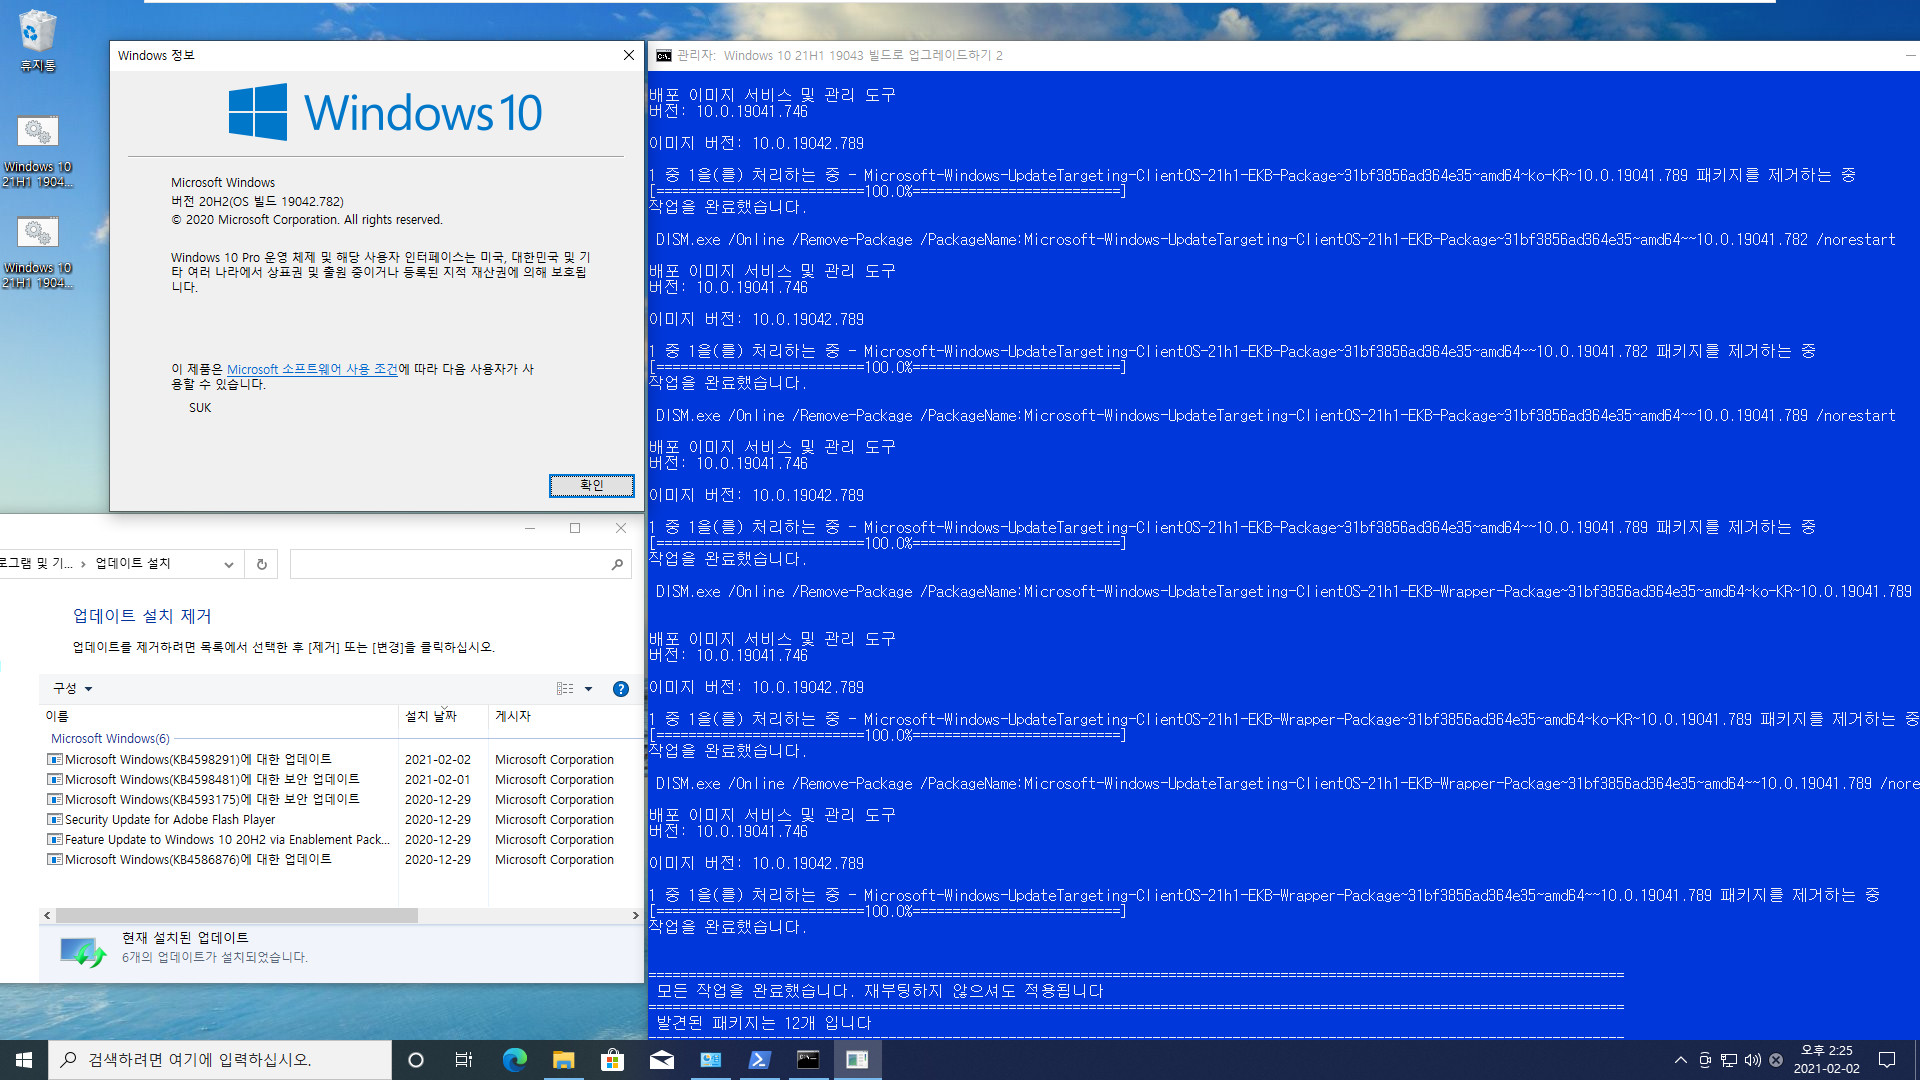 Windows 10 21H1 19043 빌드로 업그레이드하기2.bat 테스트 - 21H1 업그레이드 후에 새 누적 업데이트 설치하려면, 21H1 제거한 후에 새 누적 업데이트 설치해야 하네요 2021-02-02_142536.jpg